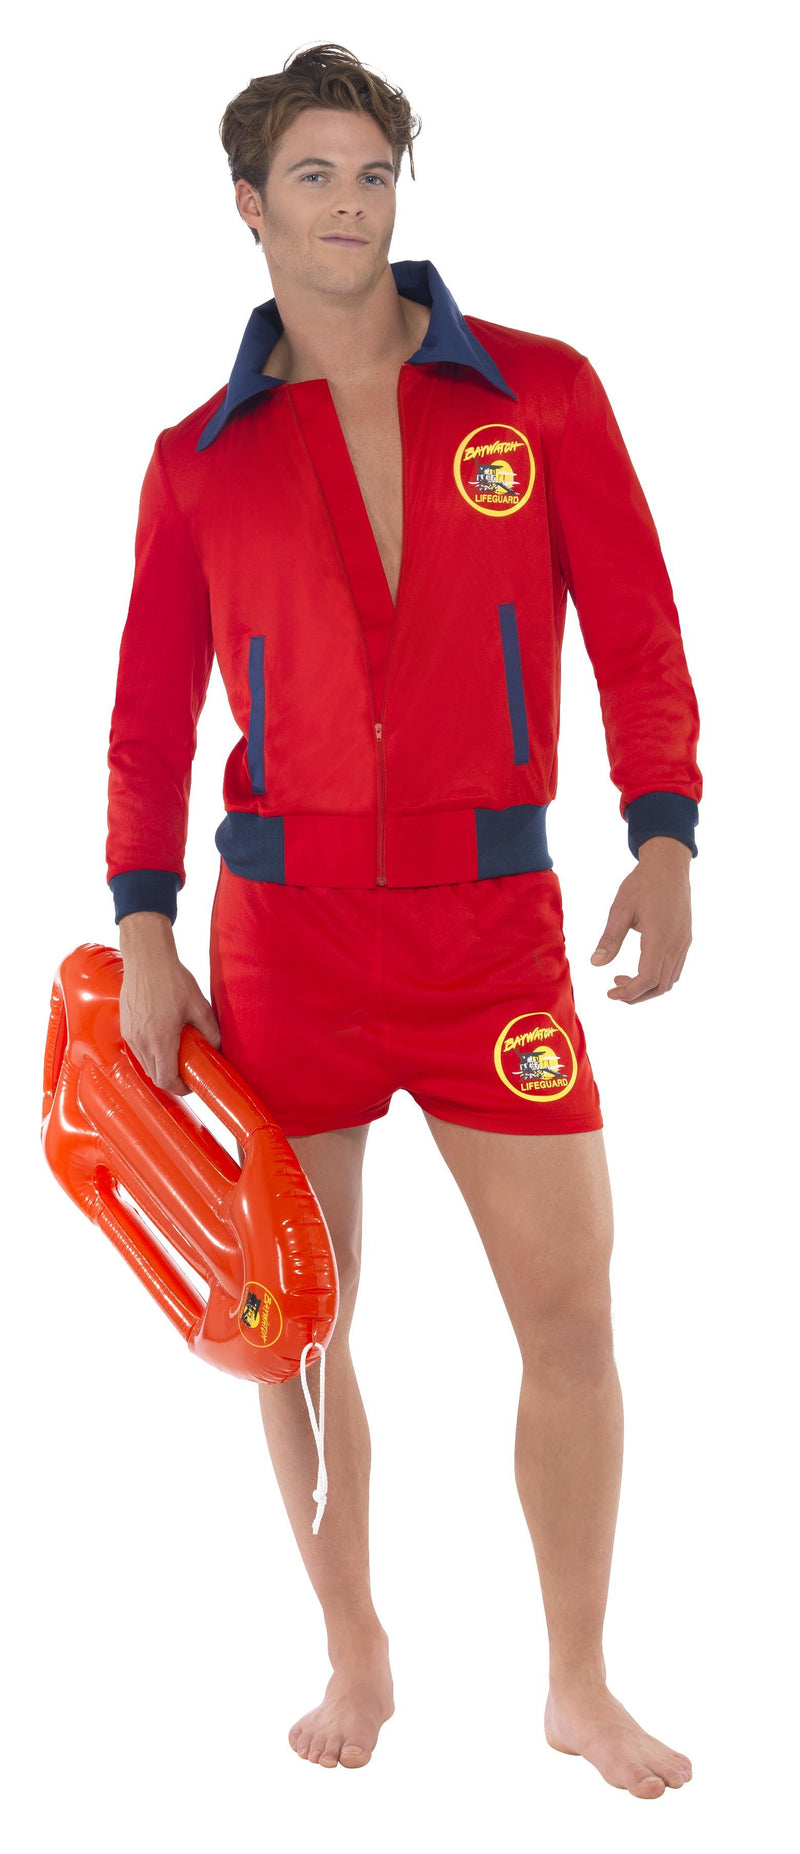 Baywatch Lifeguard Costume